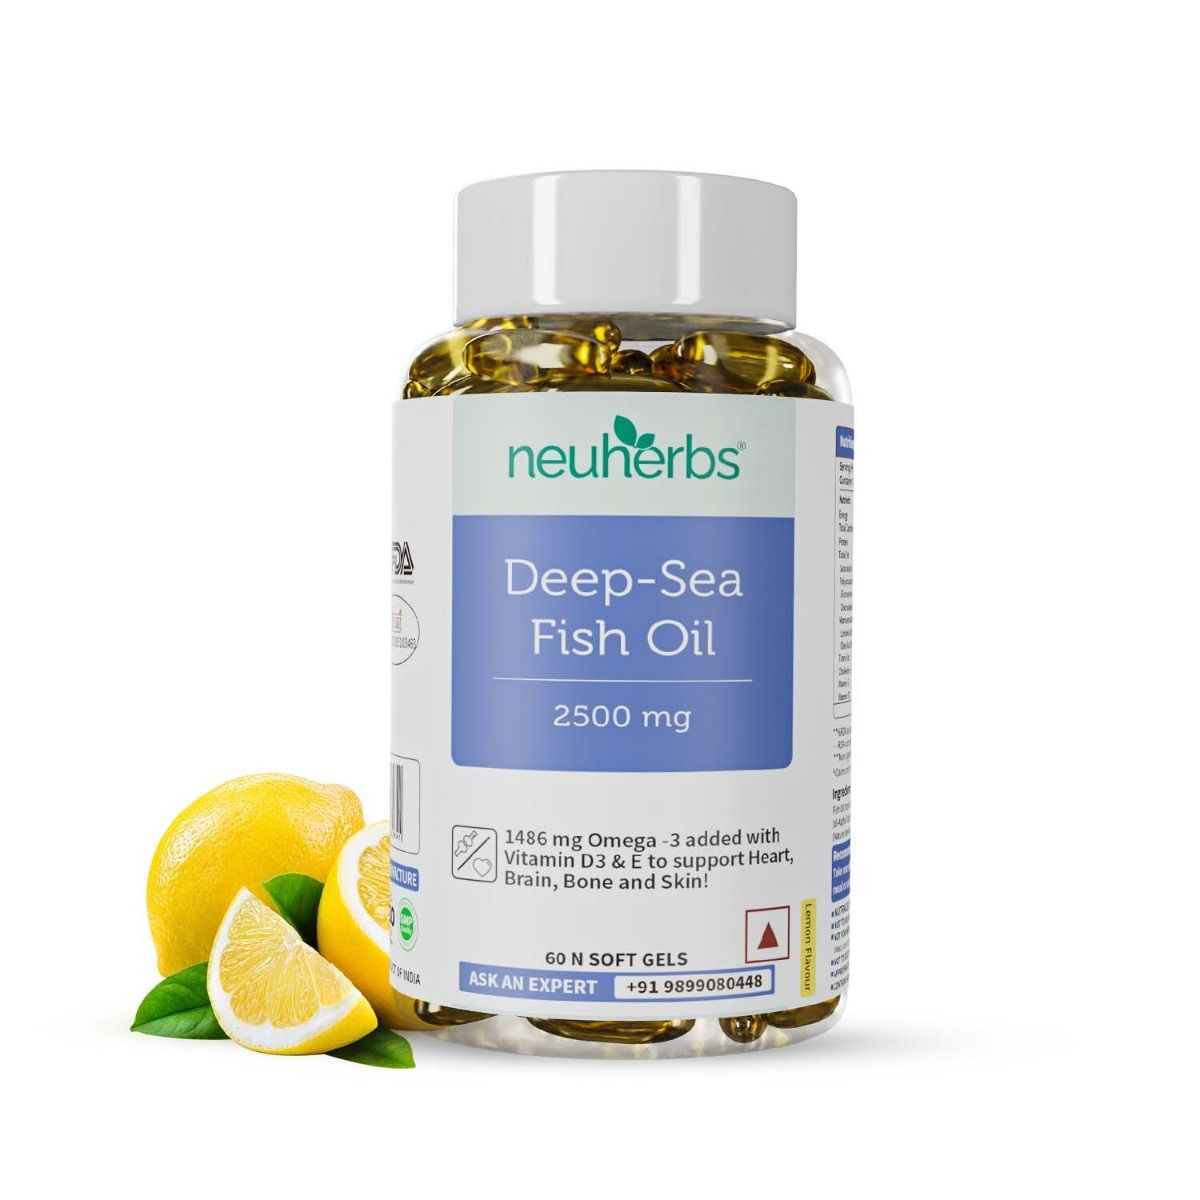 Neuherbs Deep-Sea Fish Oil 2500 mg Lemon Flavour, 60 Softgels, Pack of 1 